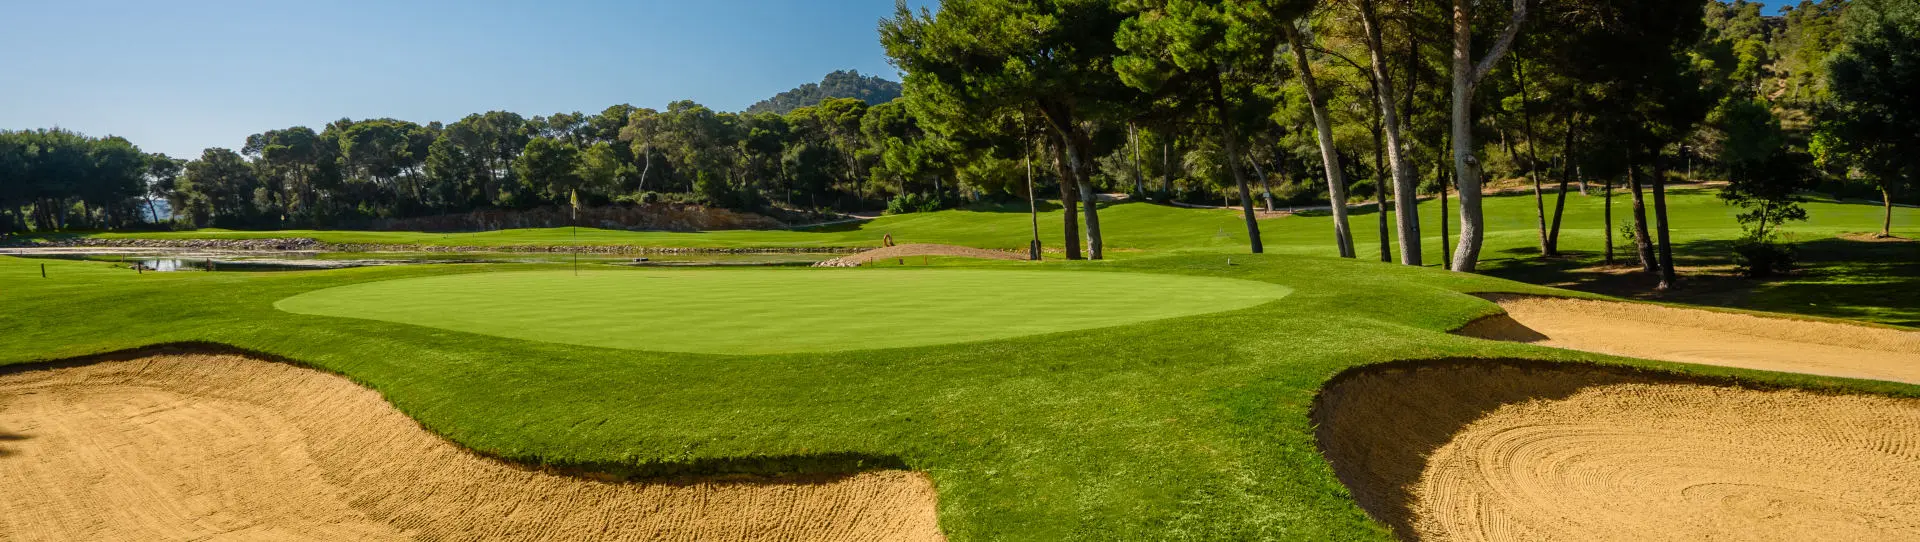 Spain golf courses - Son Servera Golf Course - Photo 1